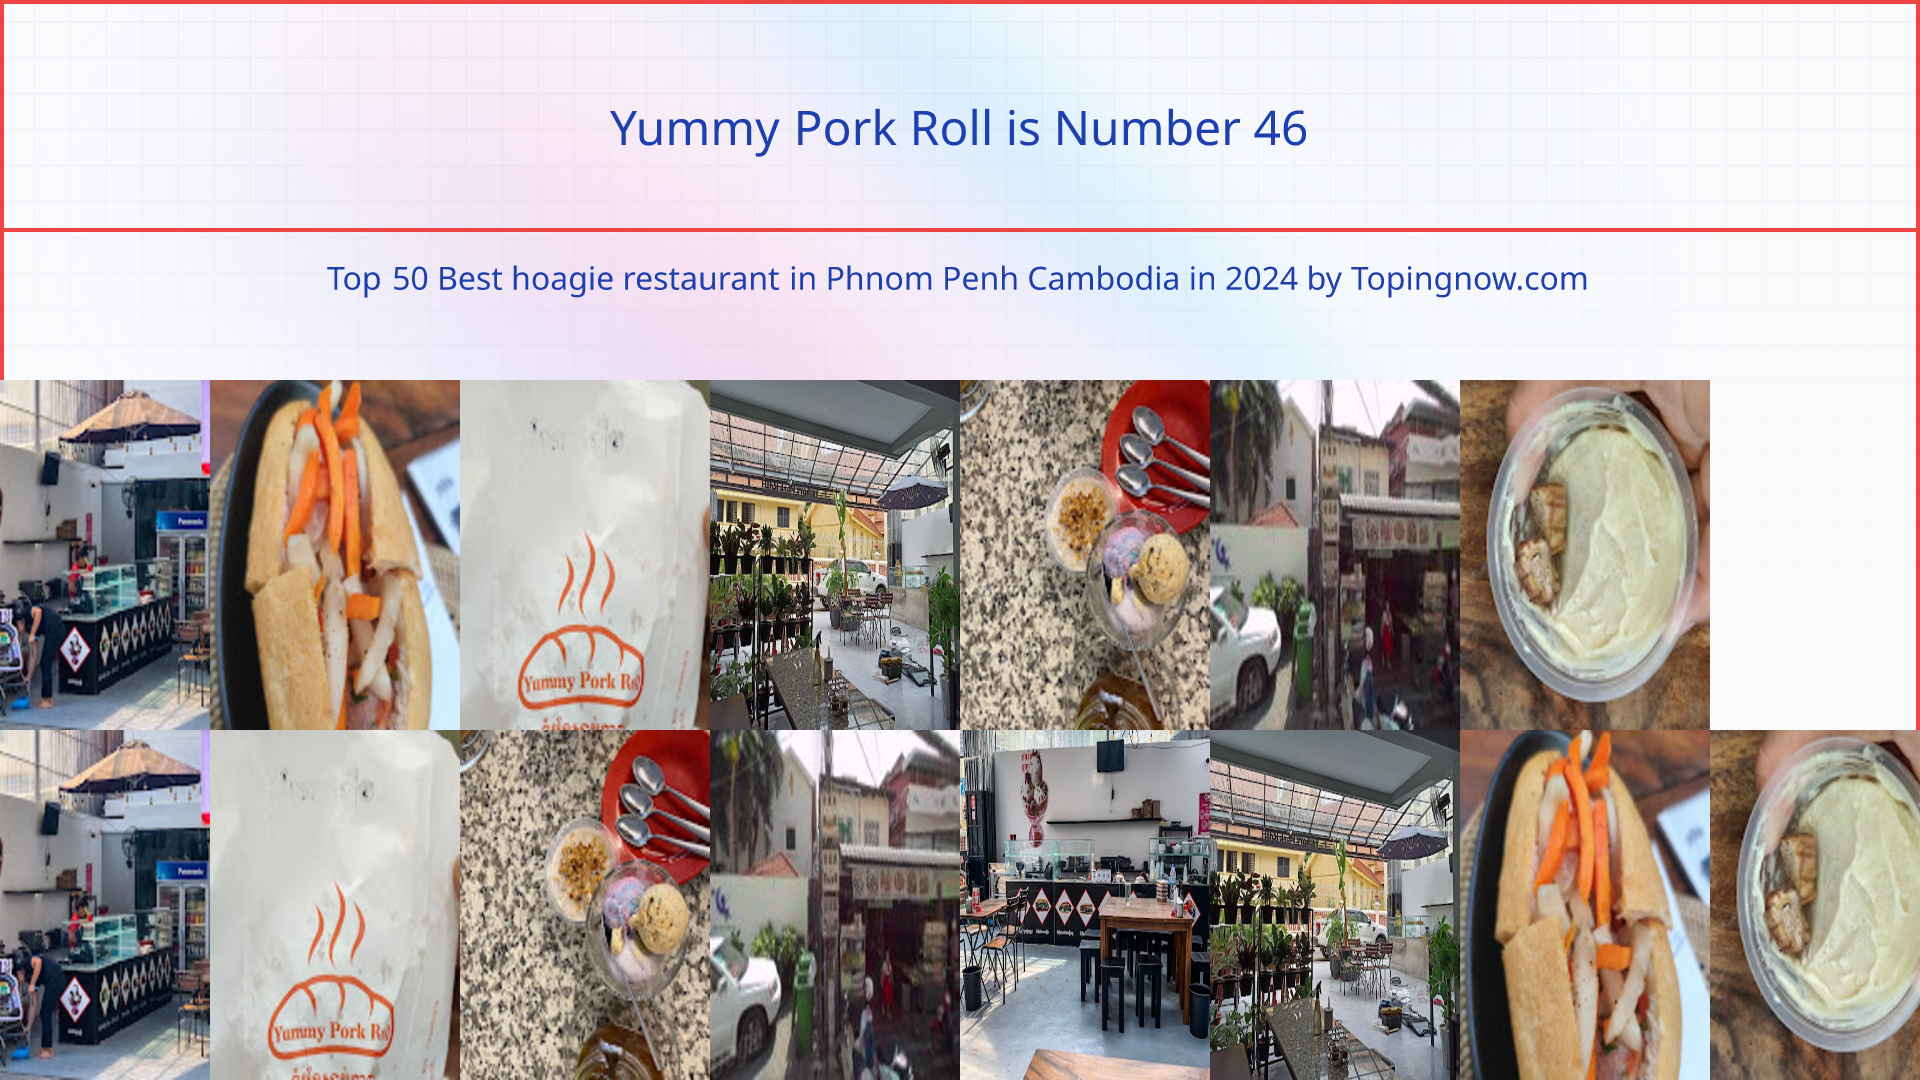 Yummy Pork Roll: Top 50 Best hoagie restaurant in Phnom Penh Cambodia in 2024